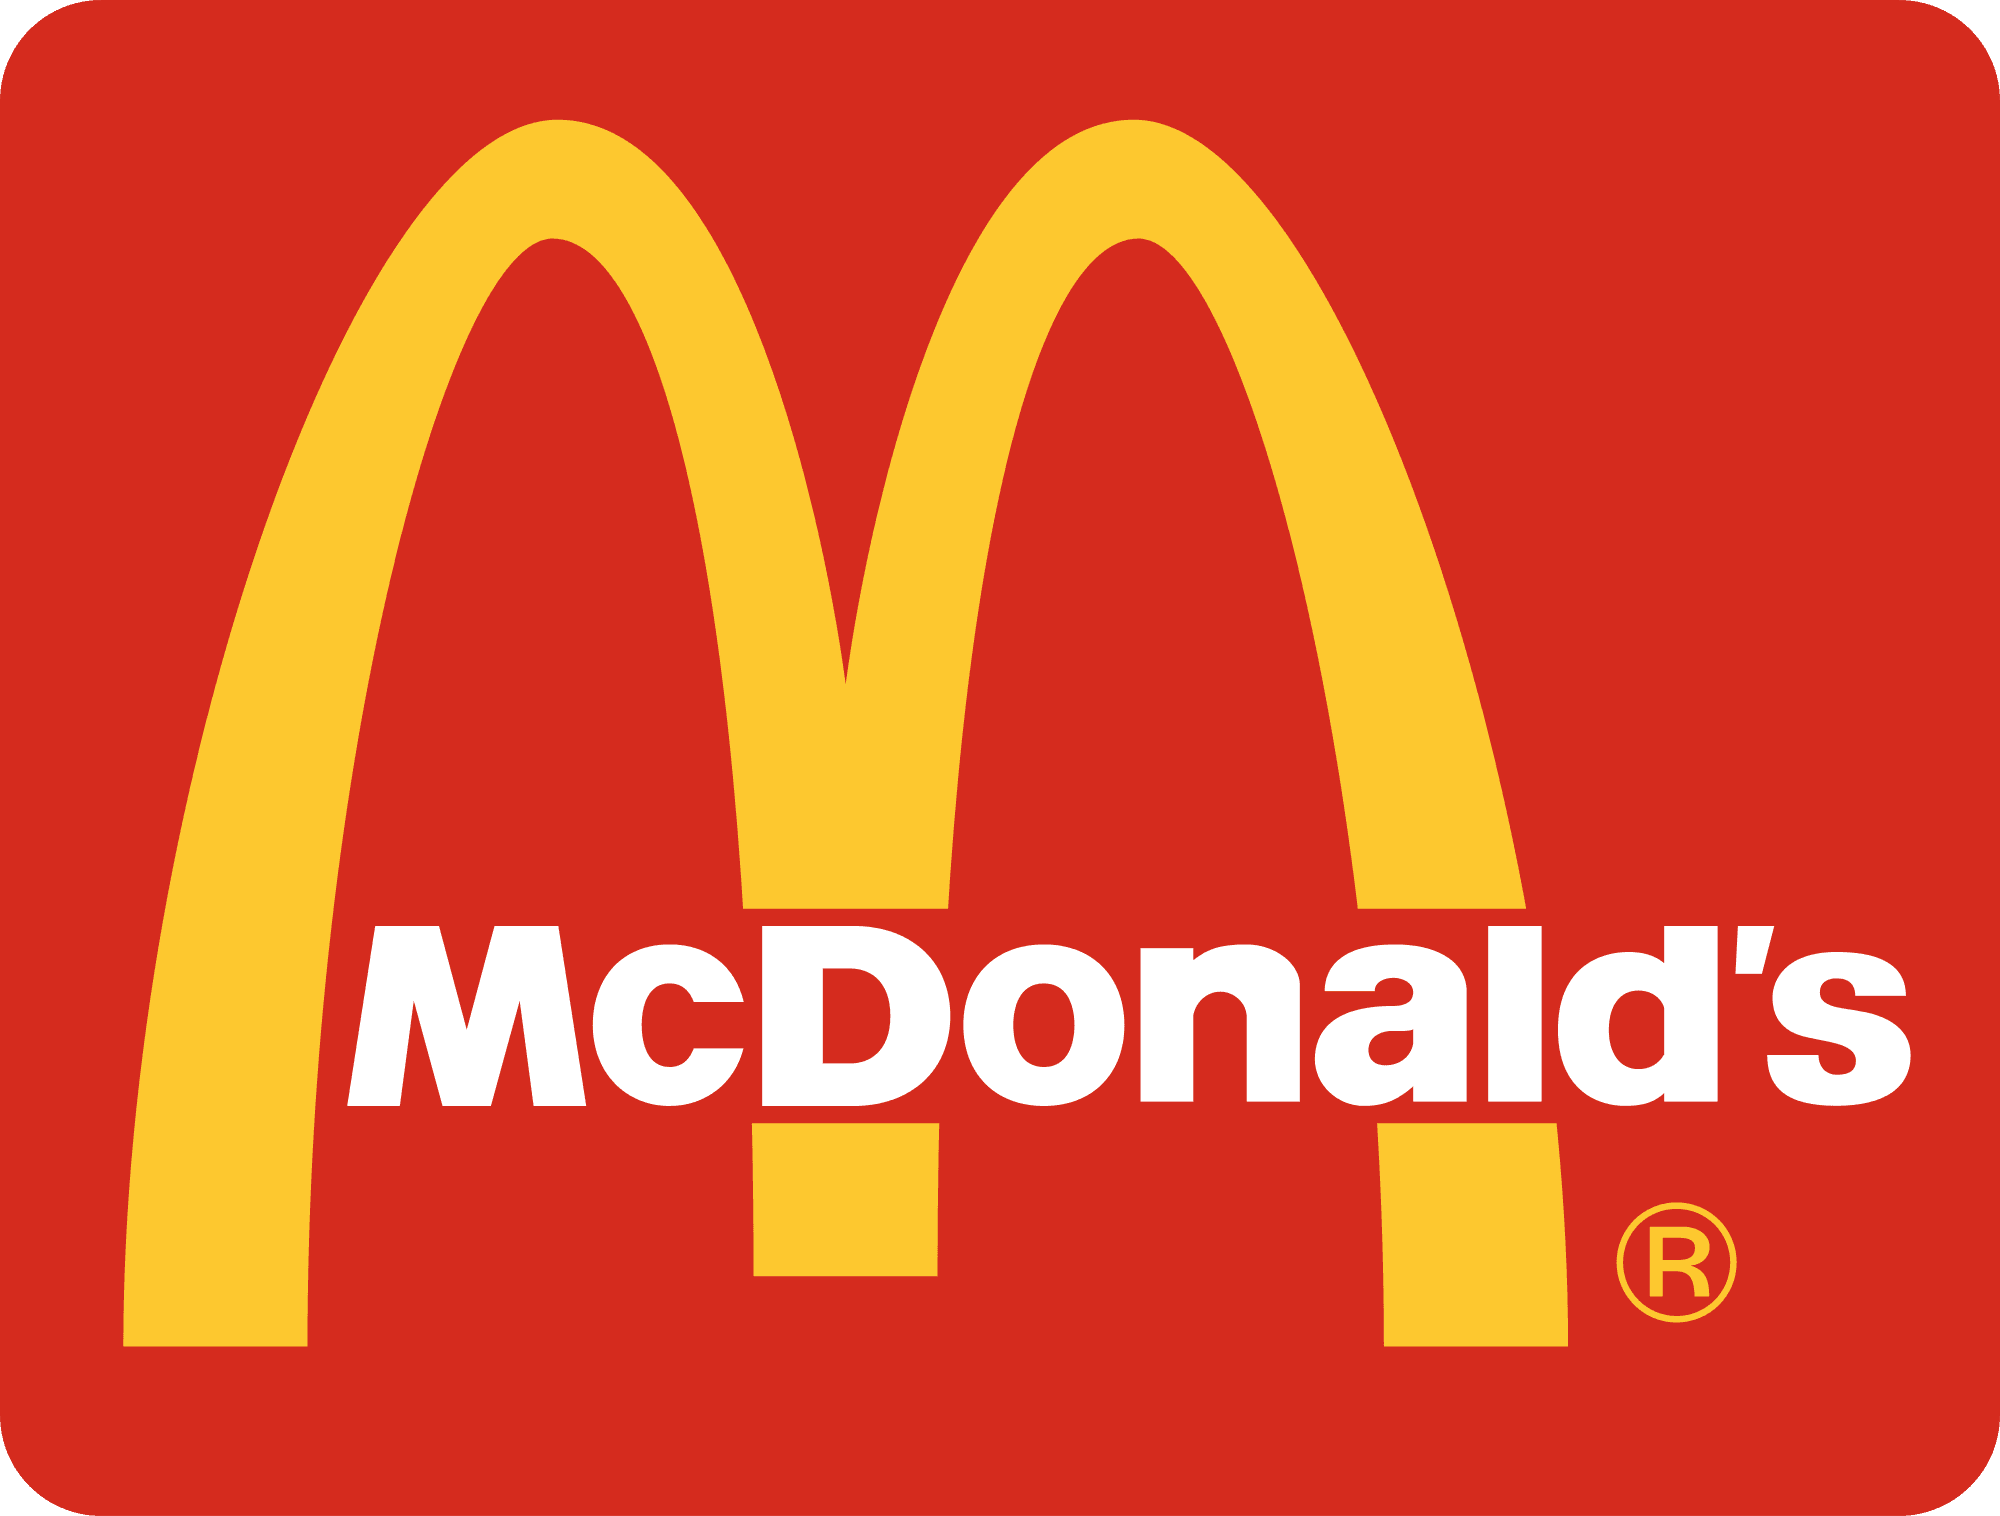 mcdonalds 90s logo taiwan 短评:麦当劳高层决定在今年全面撤离台湾